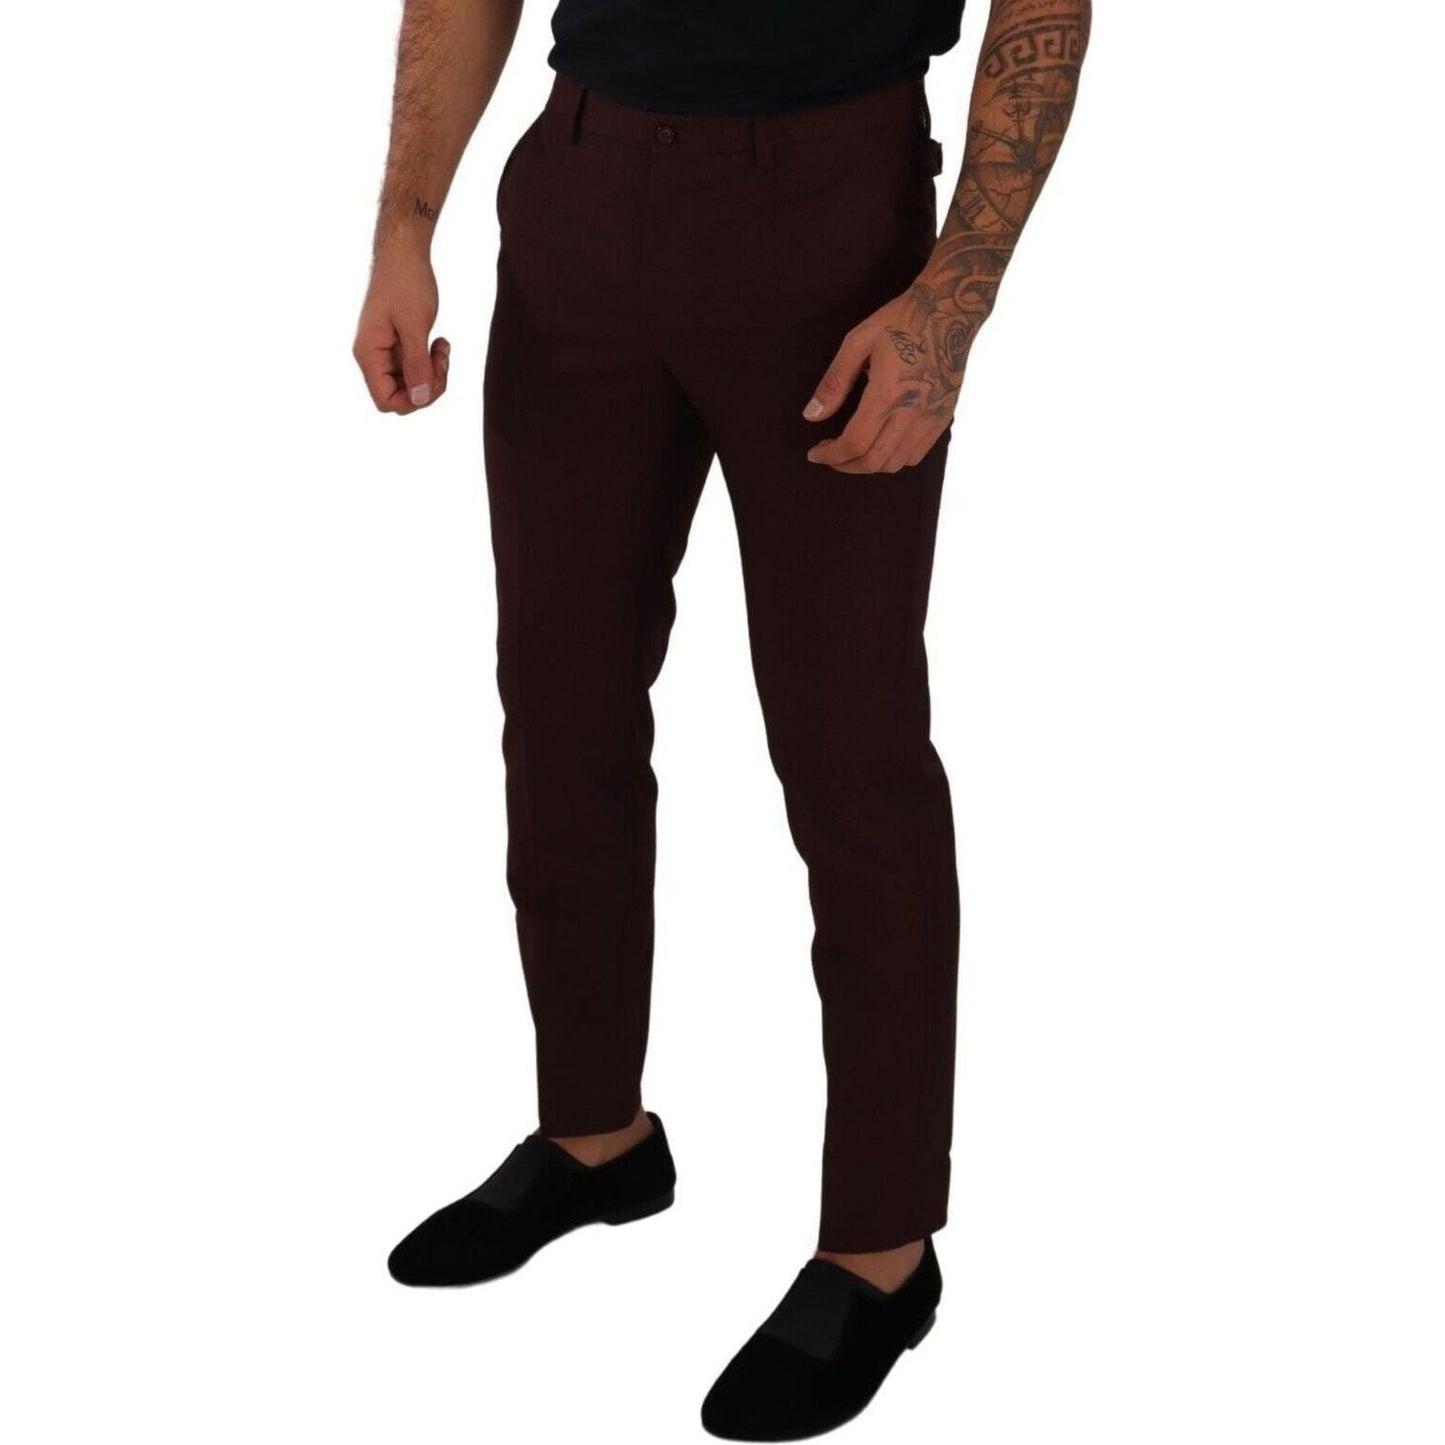 Dolce & Gabbana Maroon Slim Fit Dress Pants maroon-bordeaux-skinny-slim-trouser-pants s-l1600-3-144-40415d08-047.jpg